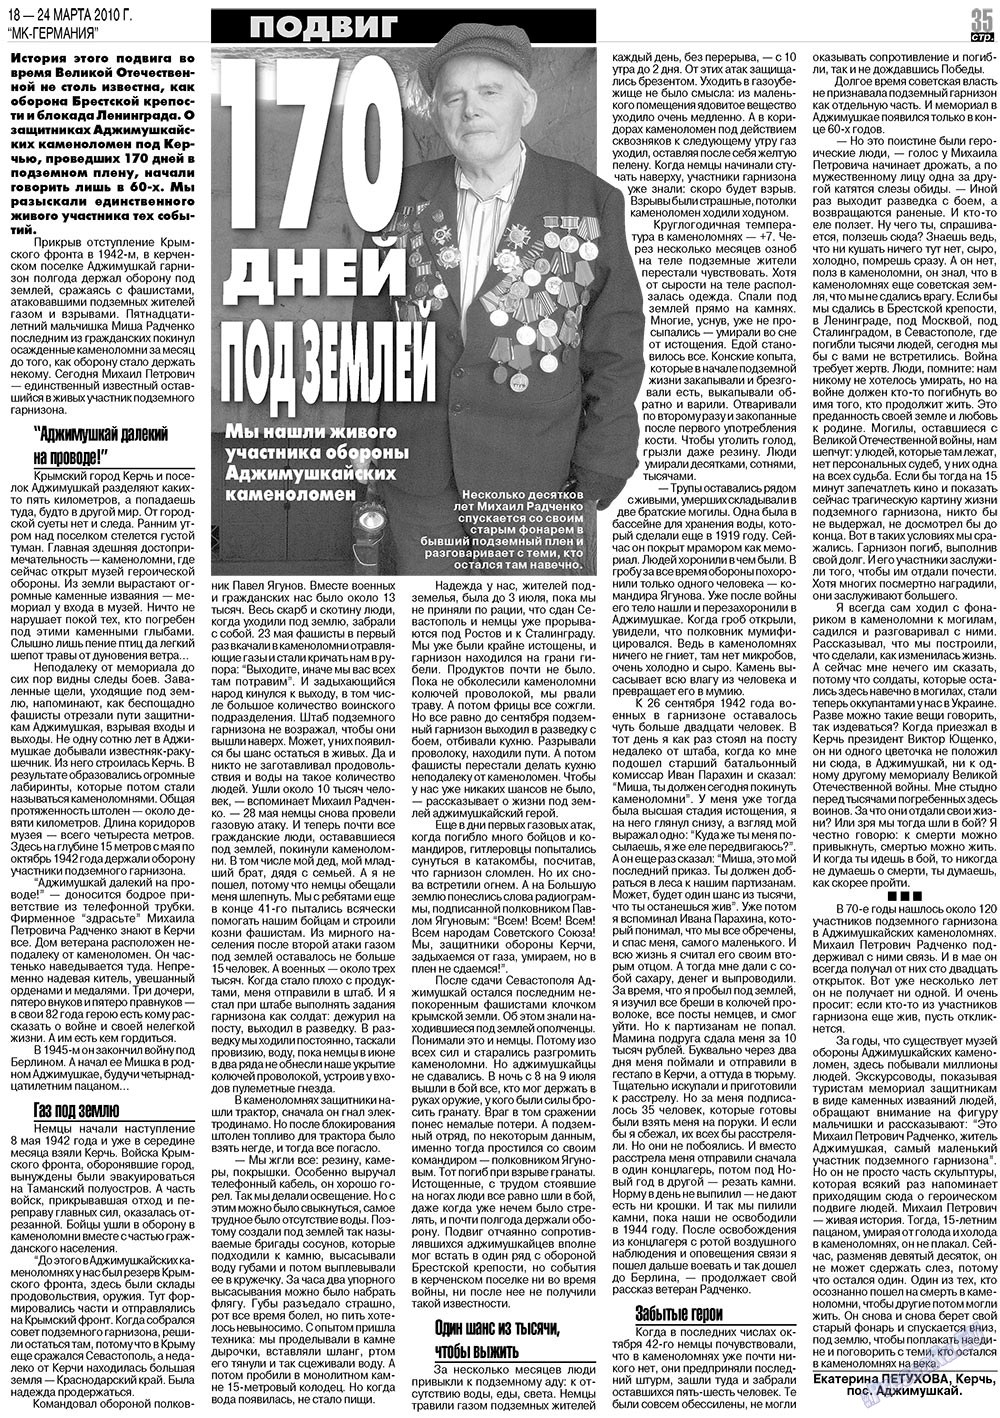 МК-Германия, газета. 2010 №12 стр.35